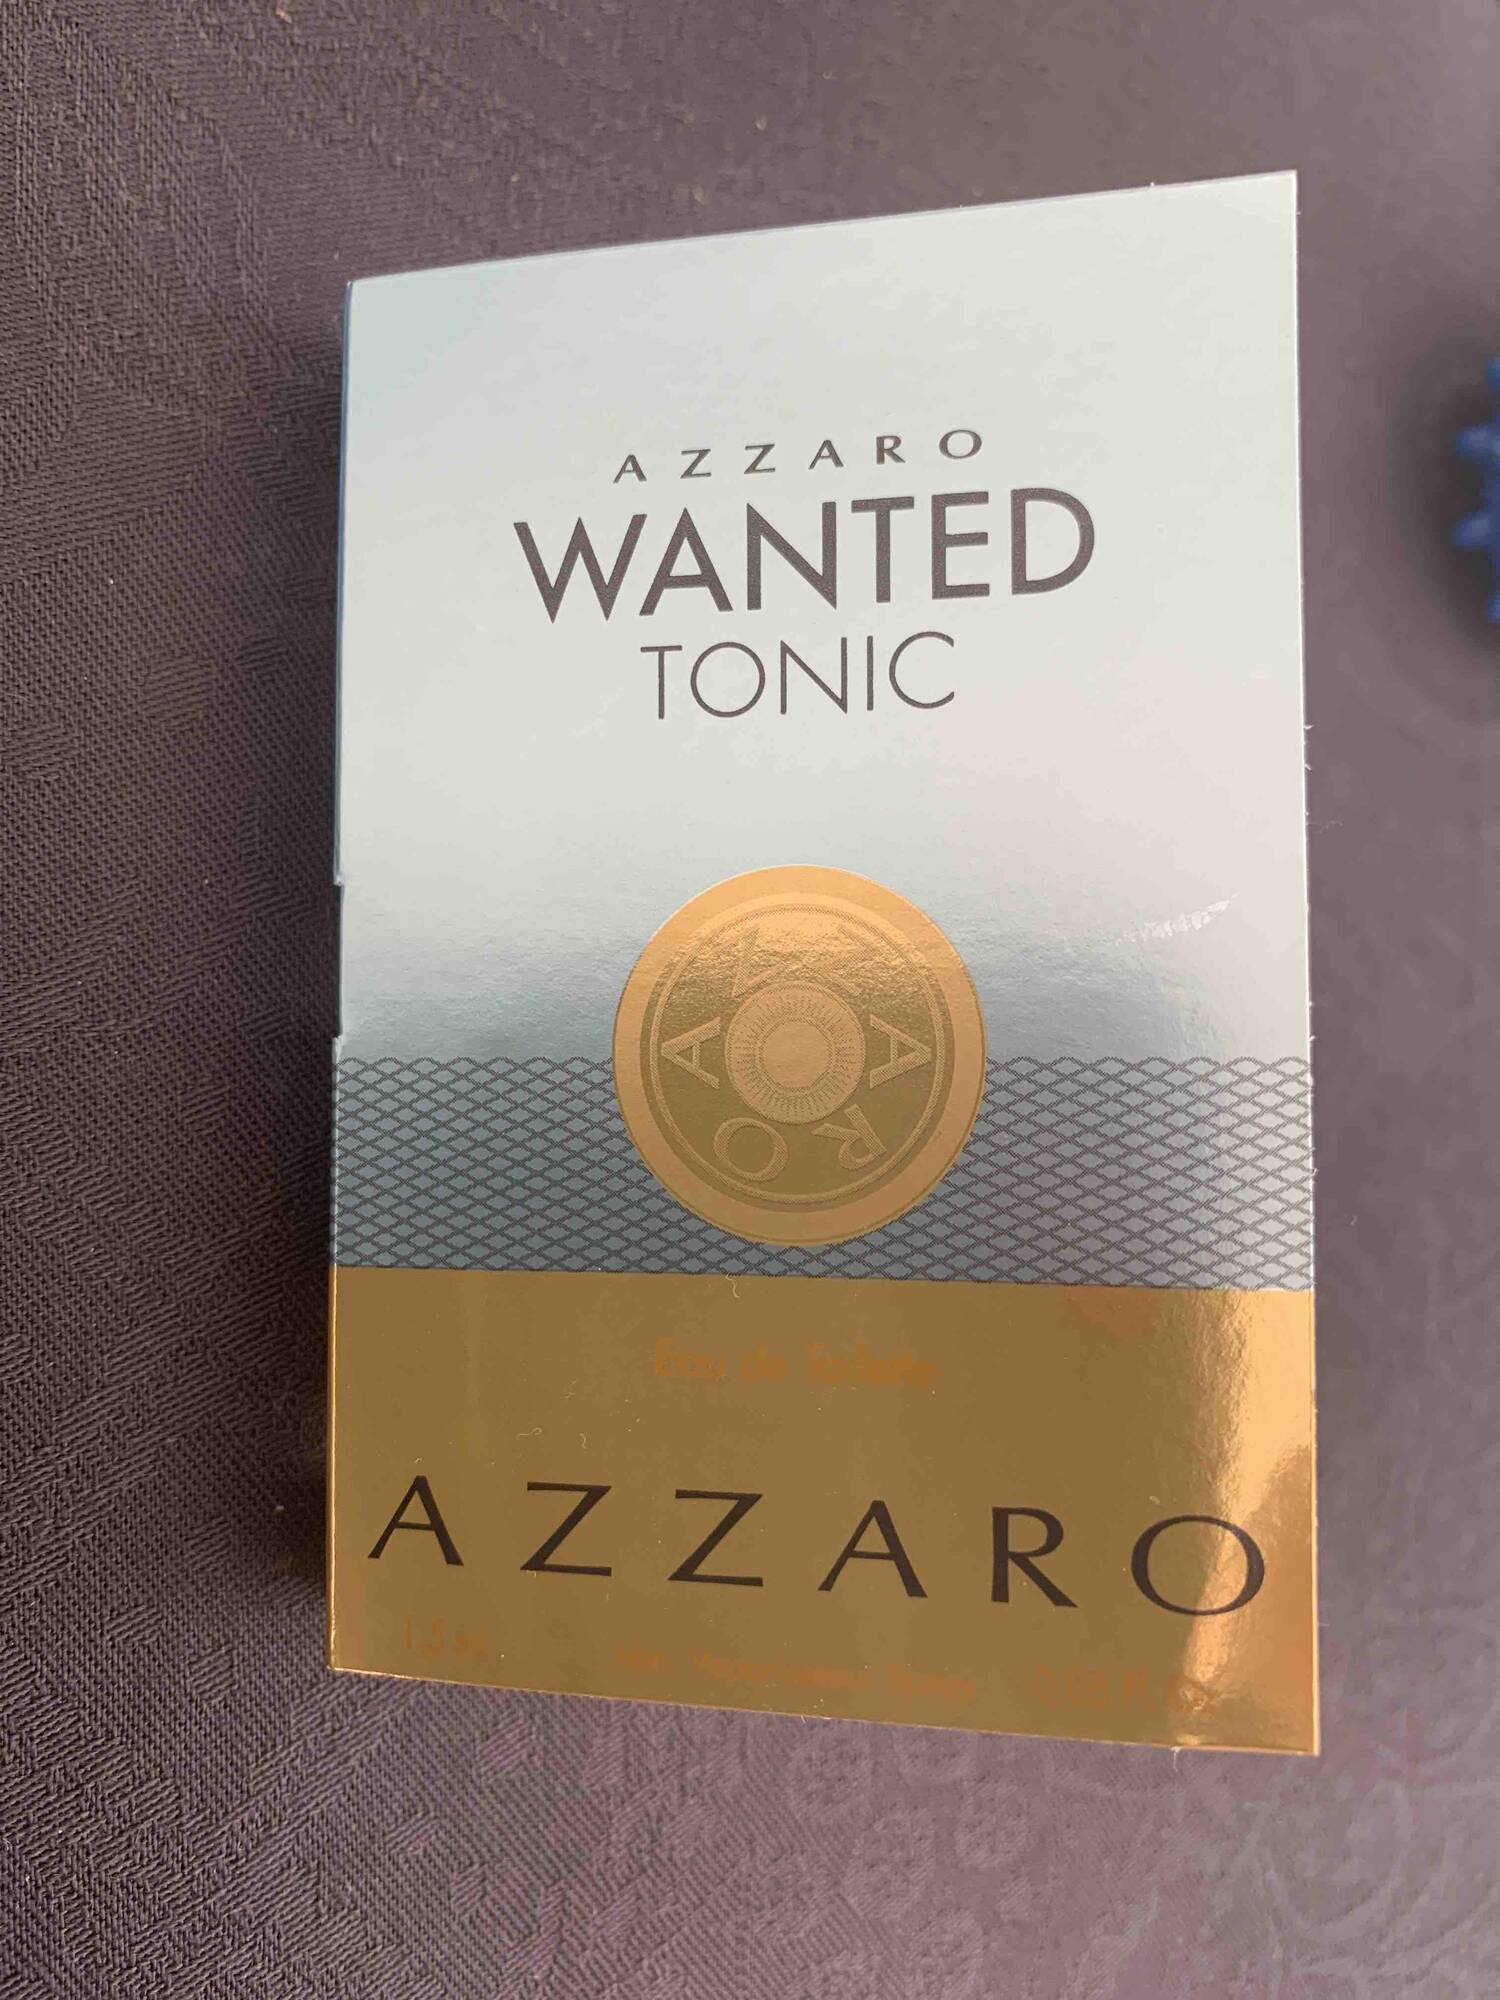 AZZARO - Wanted Tonic - Eau de toilette